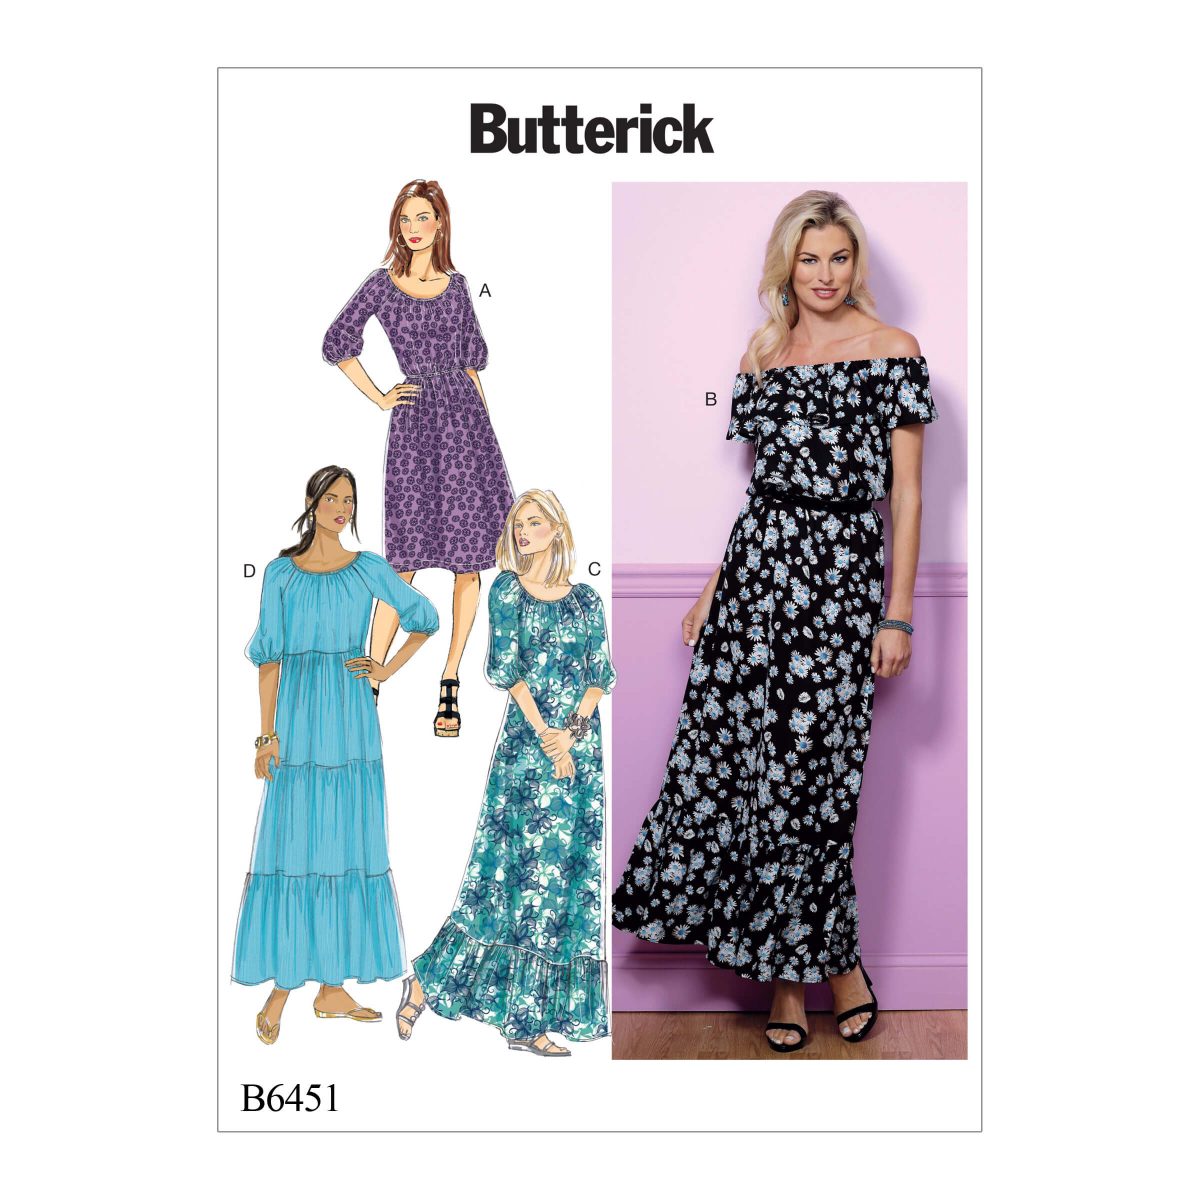 Butterick Sewing Pattern B6451 Misses' Gathered, Blouson Dresses